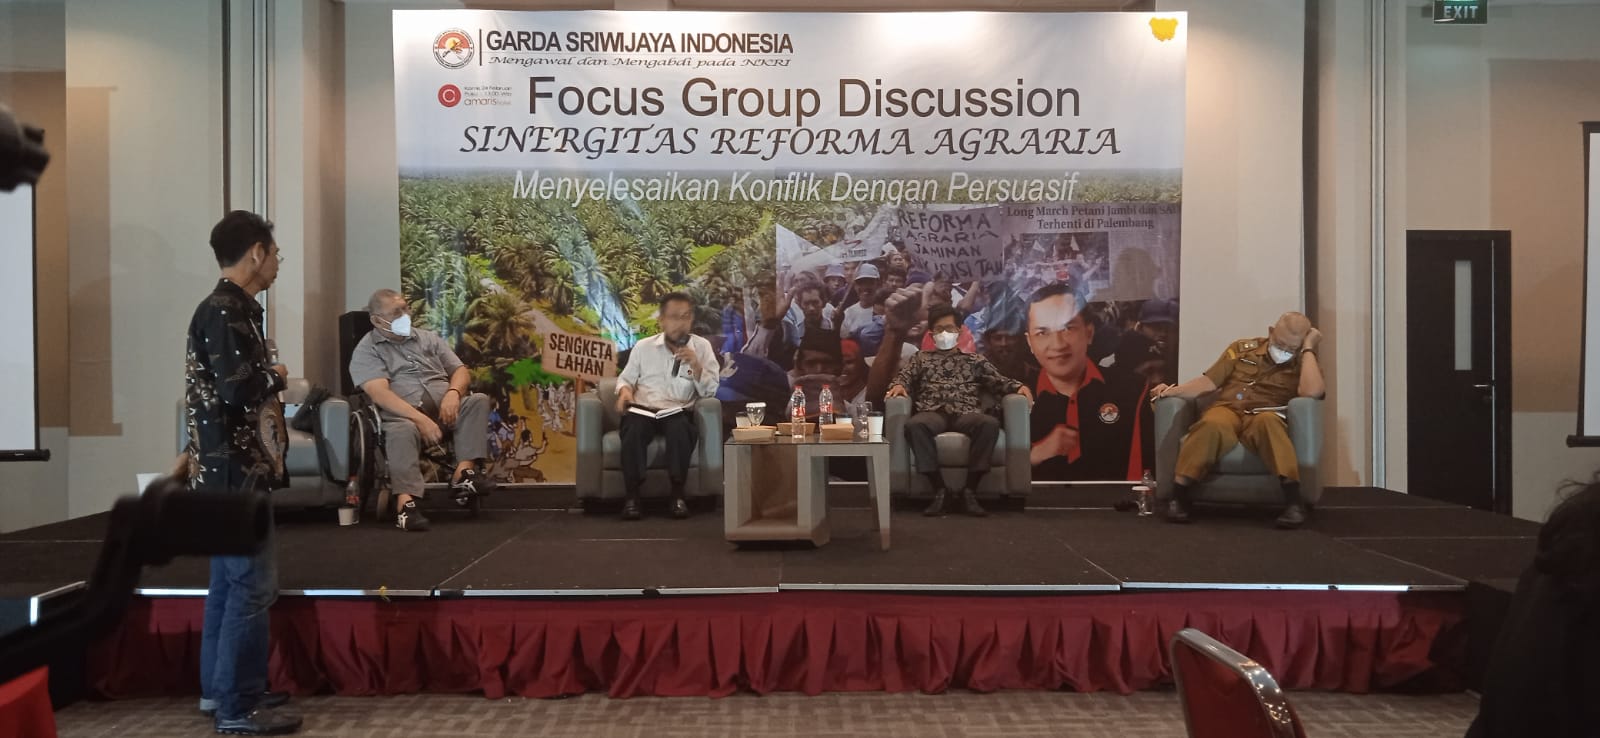 Garda Sriwijaya Indonesia Menyelesaikan Konflik Agraria